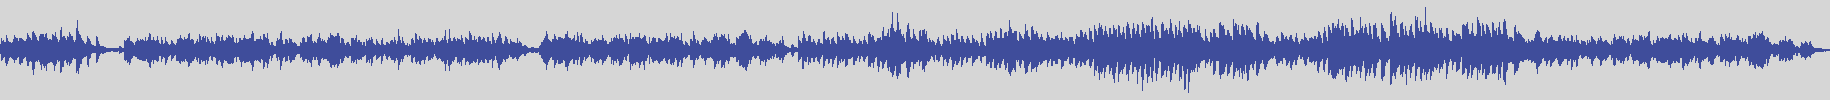 big_music_classic [BMC002] Frédéric Chopin, C Red - Mazurka Op.50 N.2 [] audio wave form